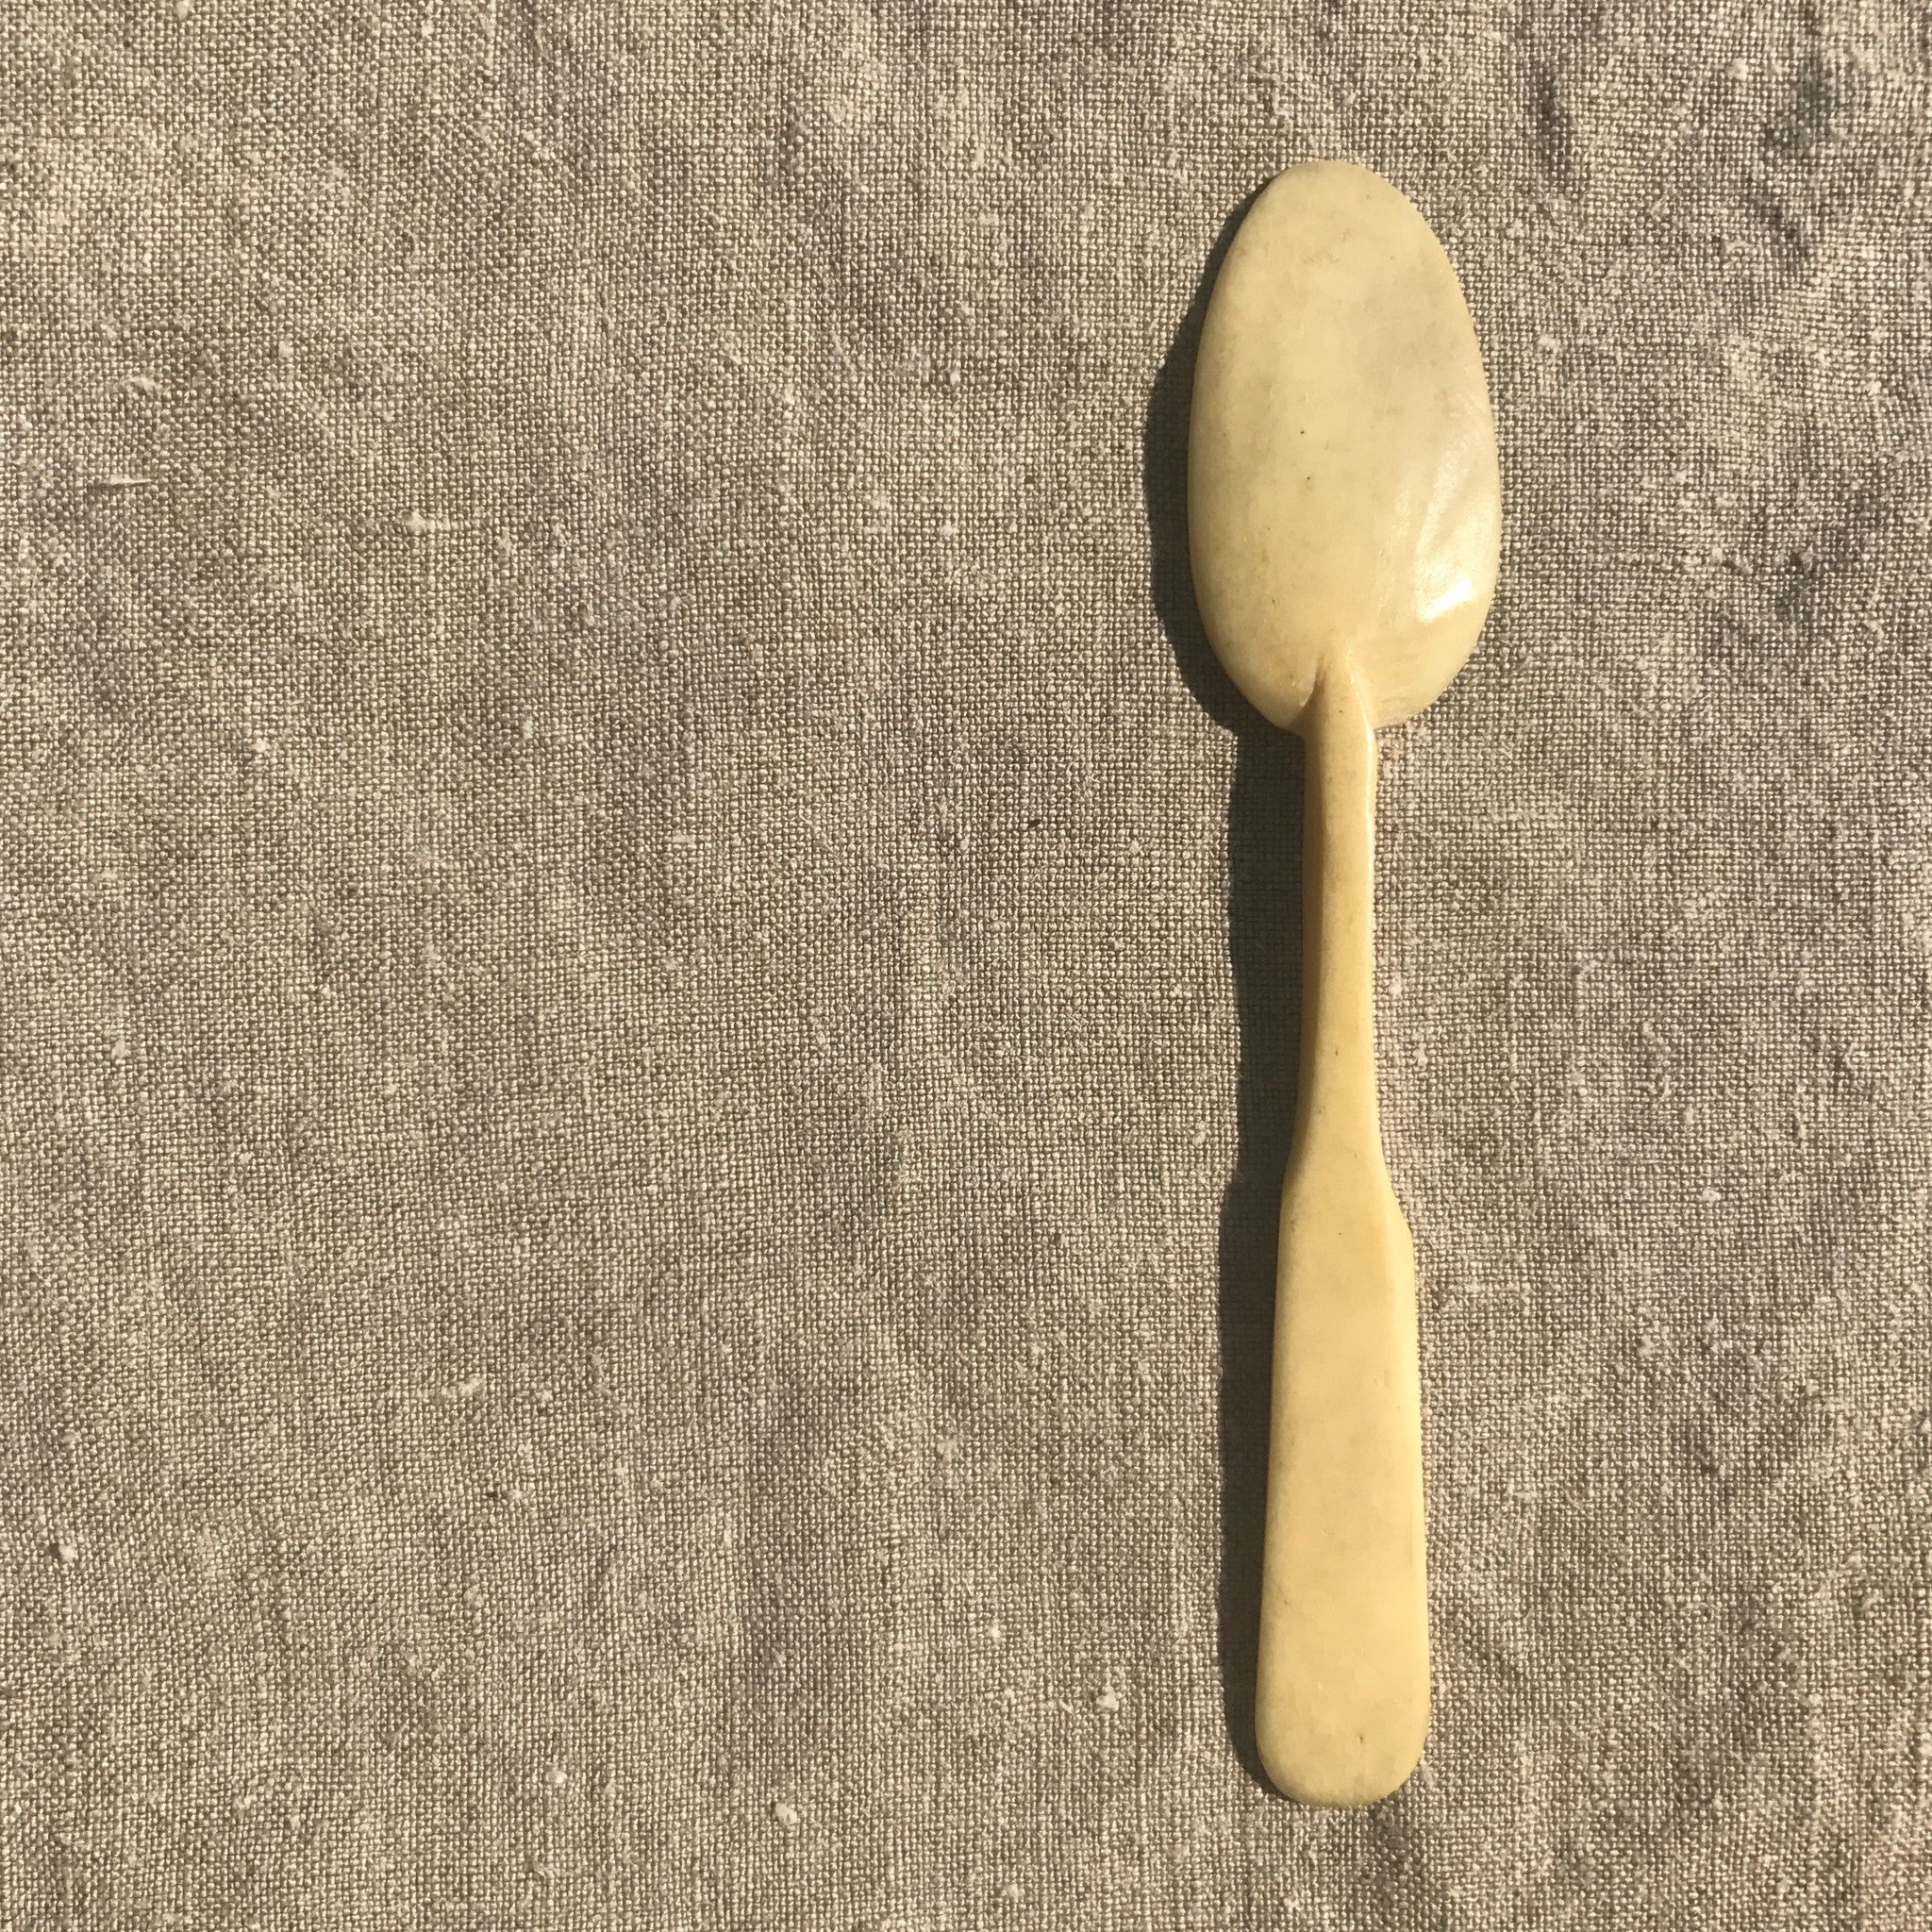 seaman's caviar spoon (4 of 7)